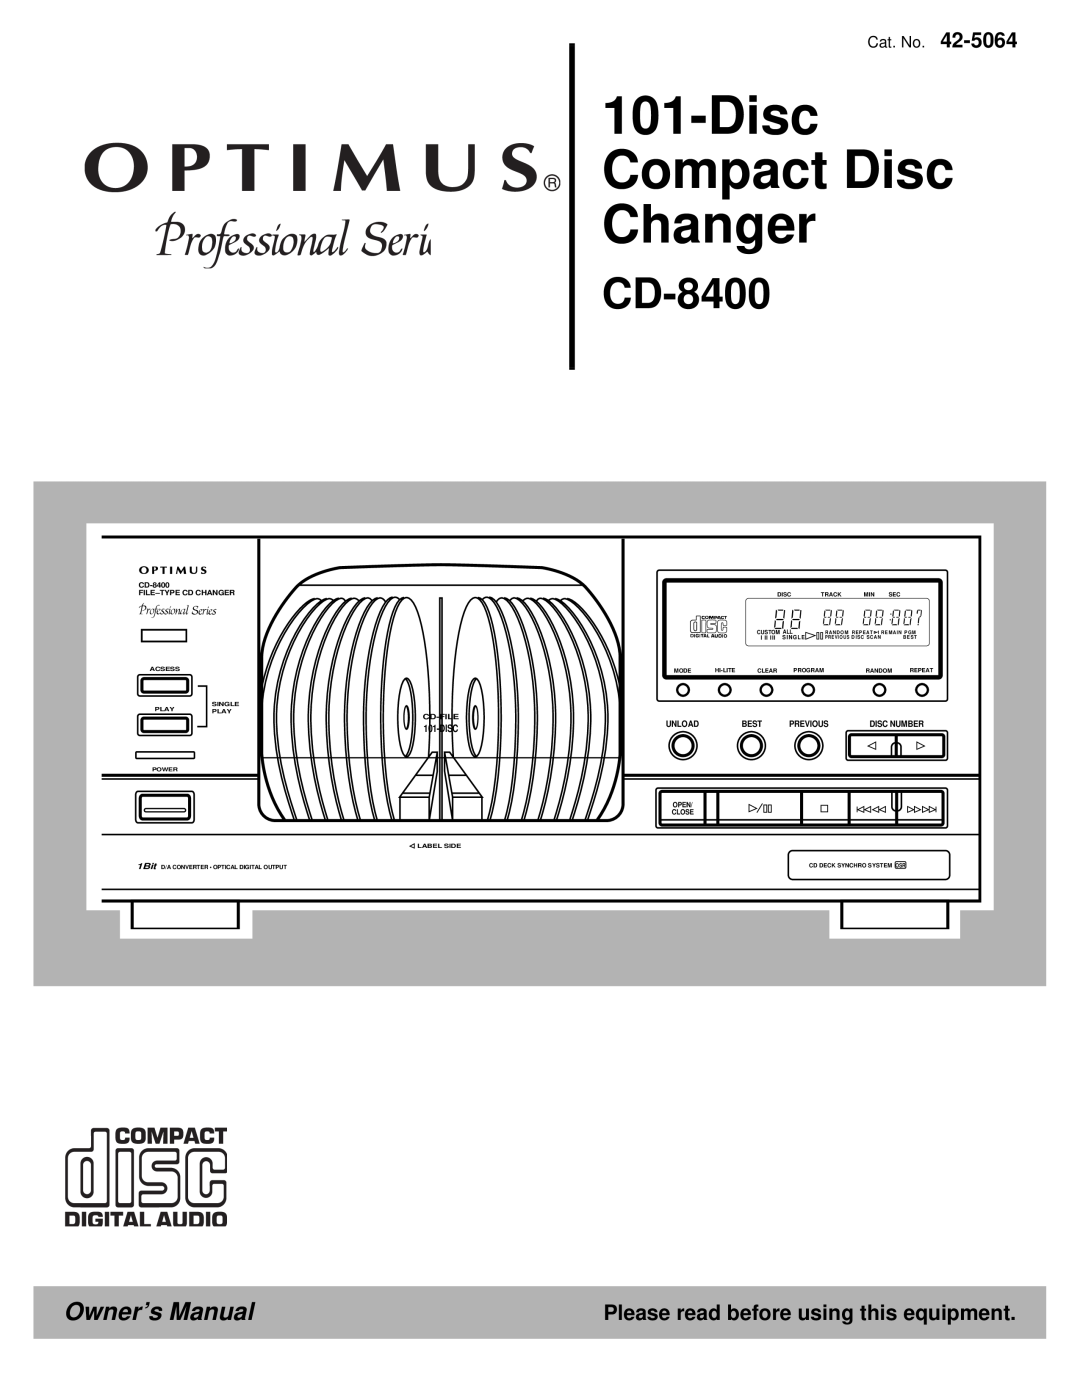 Radio Shack CD-8400 owner manual DiscCompact Disc Changer, Best, File-Typecd Changer, Cd-File, Unload, Disc Number, Open 